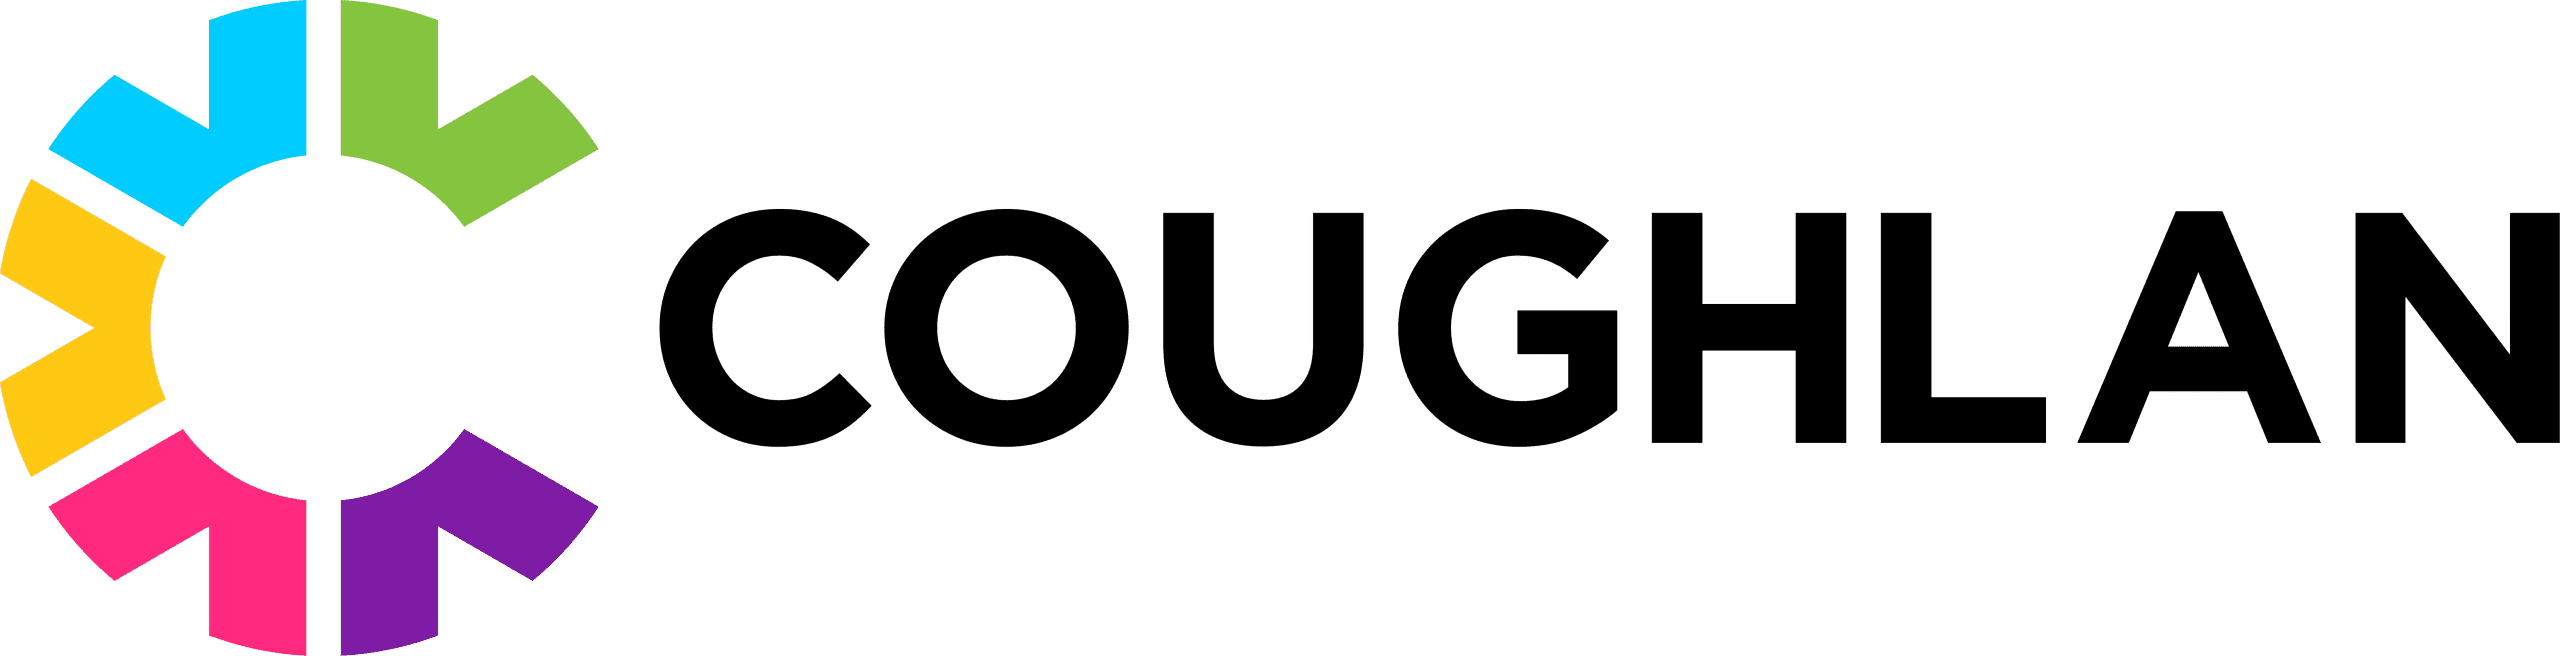 Coughlan Logo SIDE version